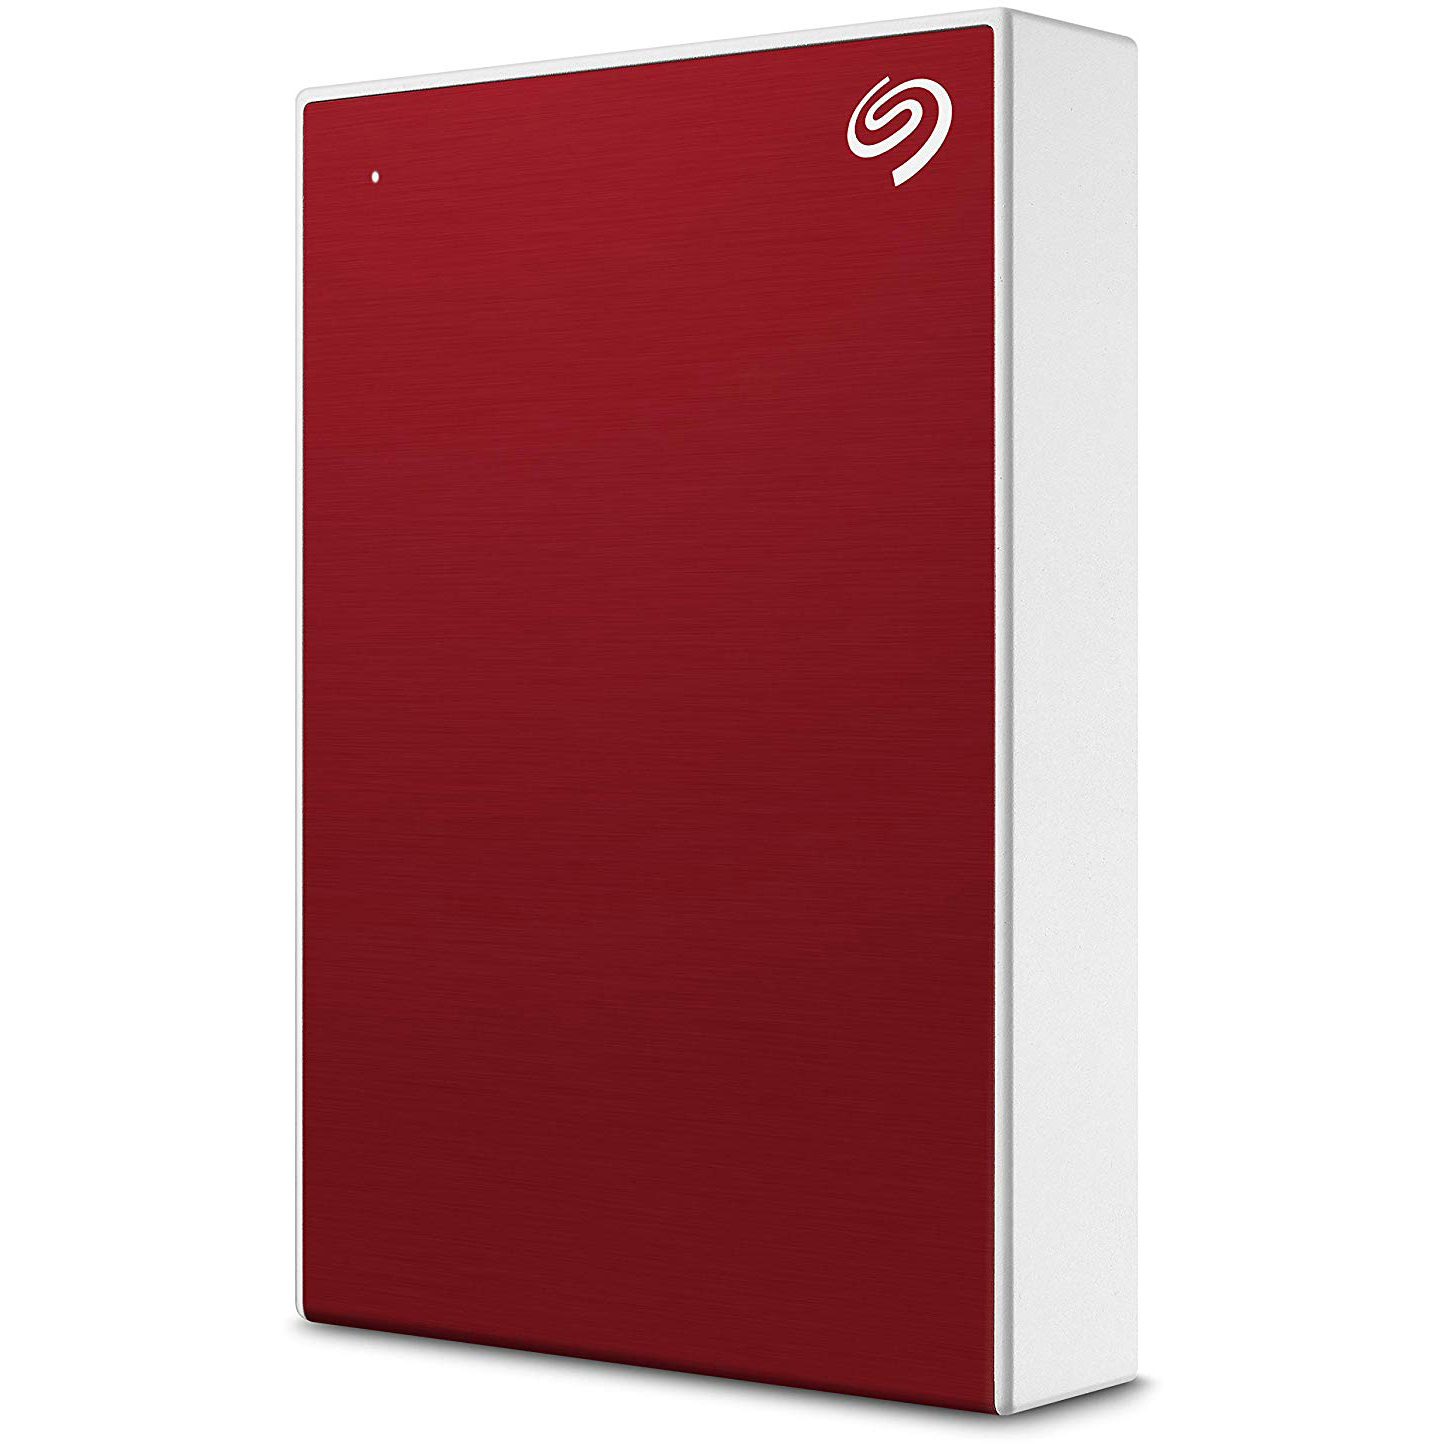 Original Seagate Backup Plus 4TB Red 2.5inch USB 3.0 External Hard Drive (STHP4000403)